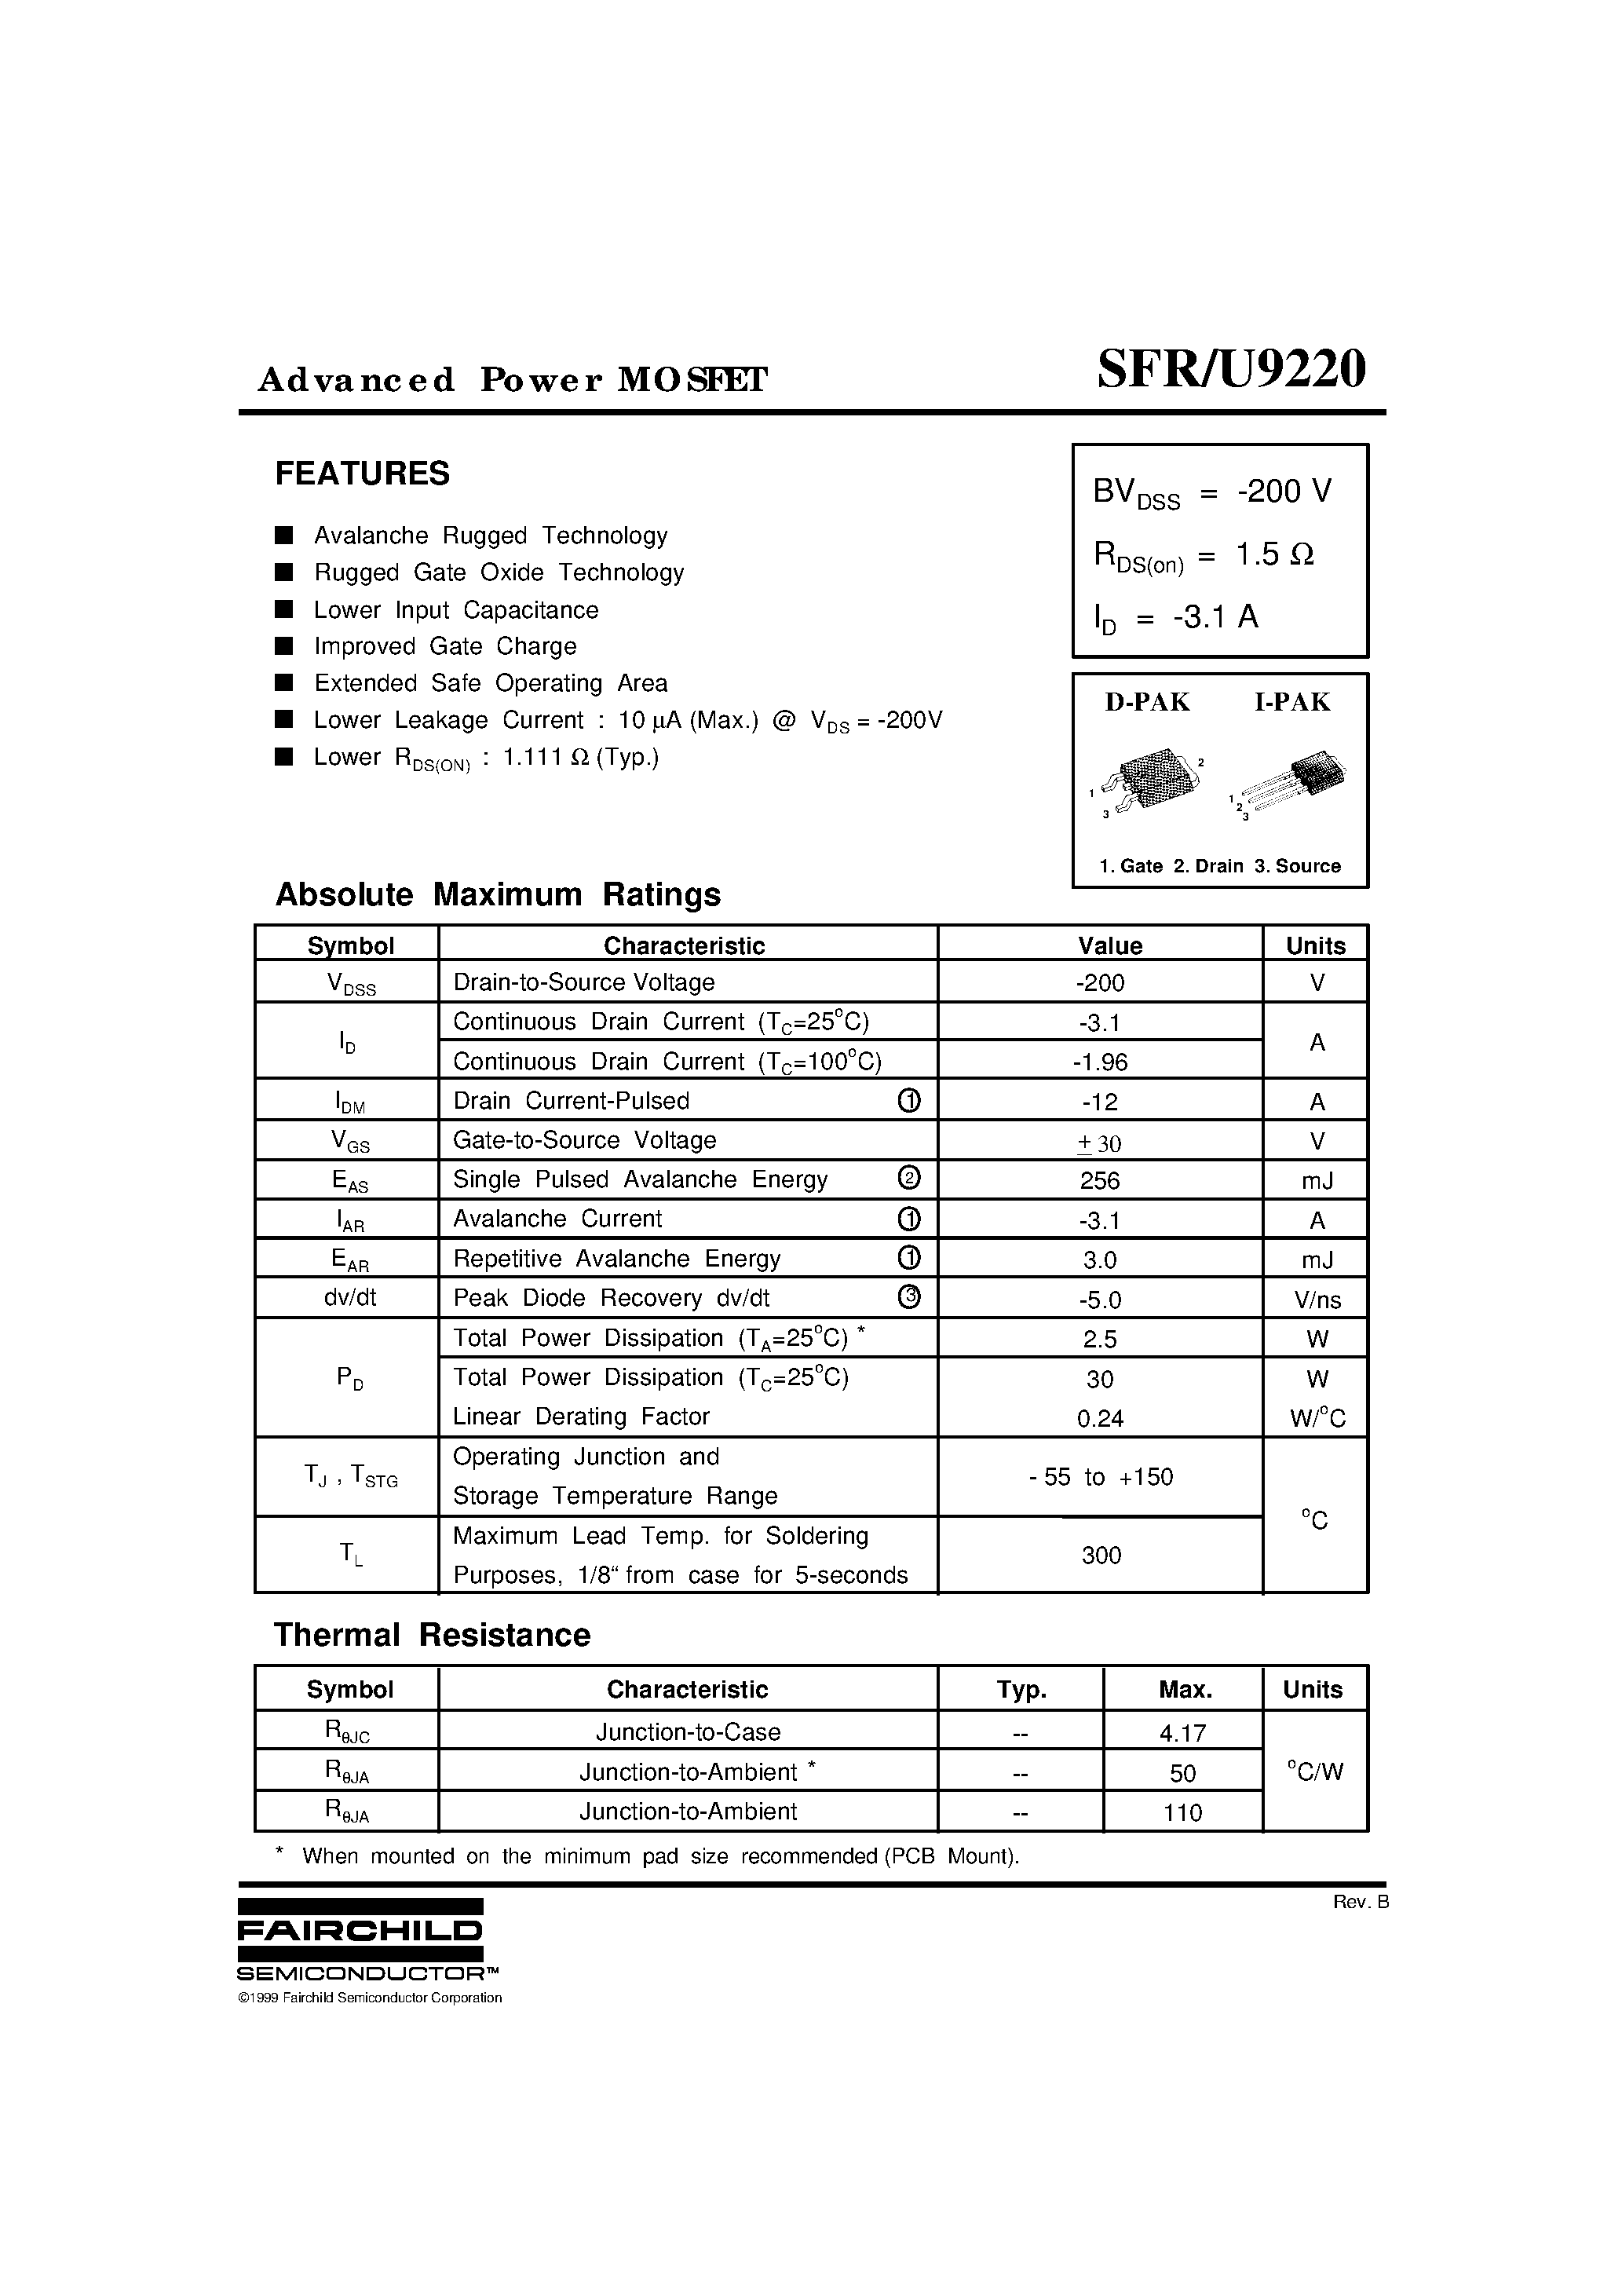 Datasheet SFRU9220 - Advanced Power MOSFET page 1